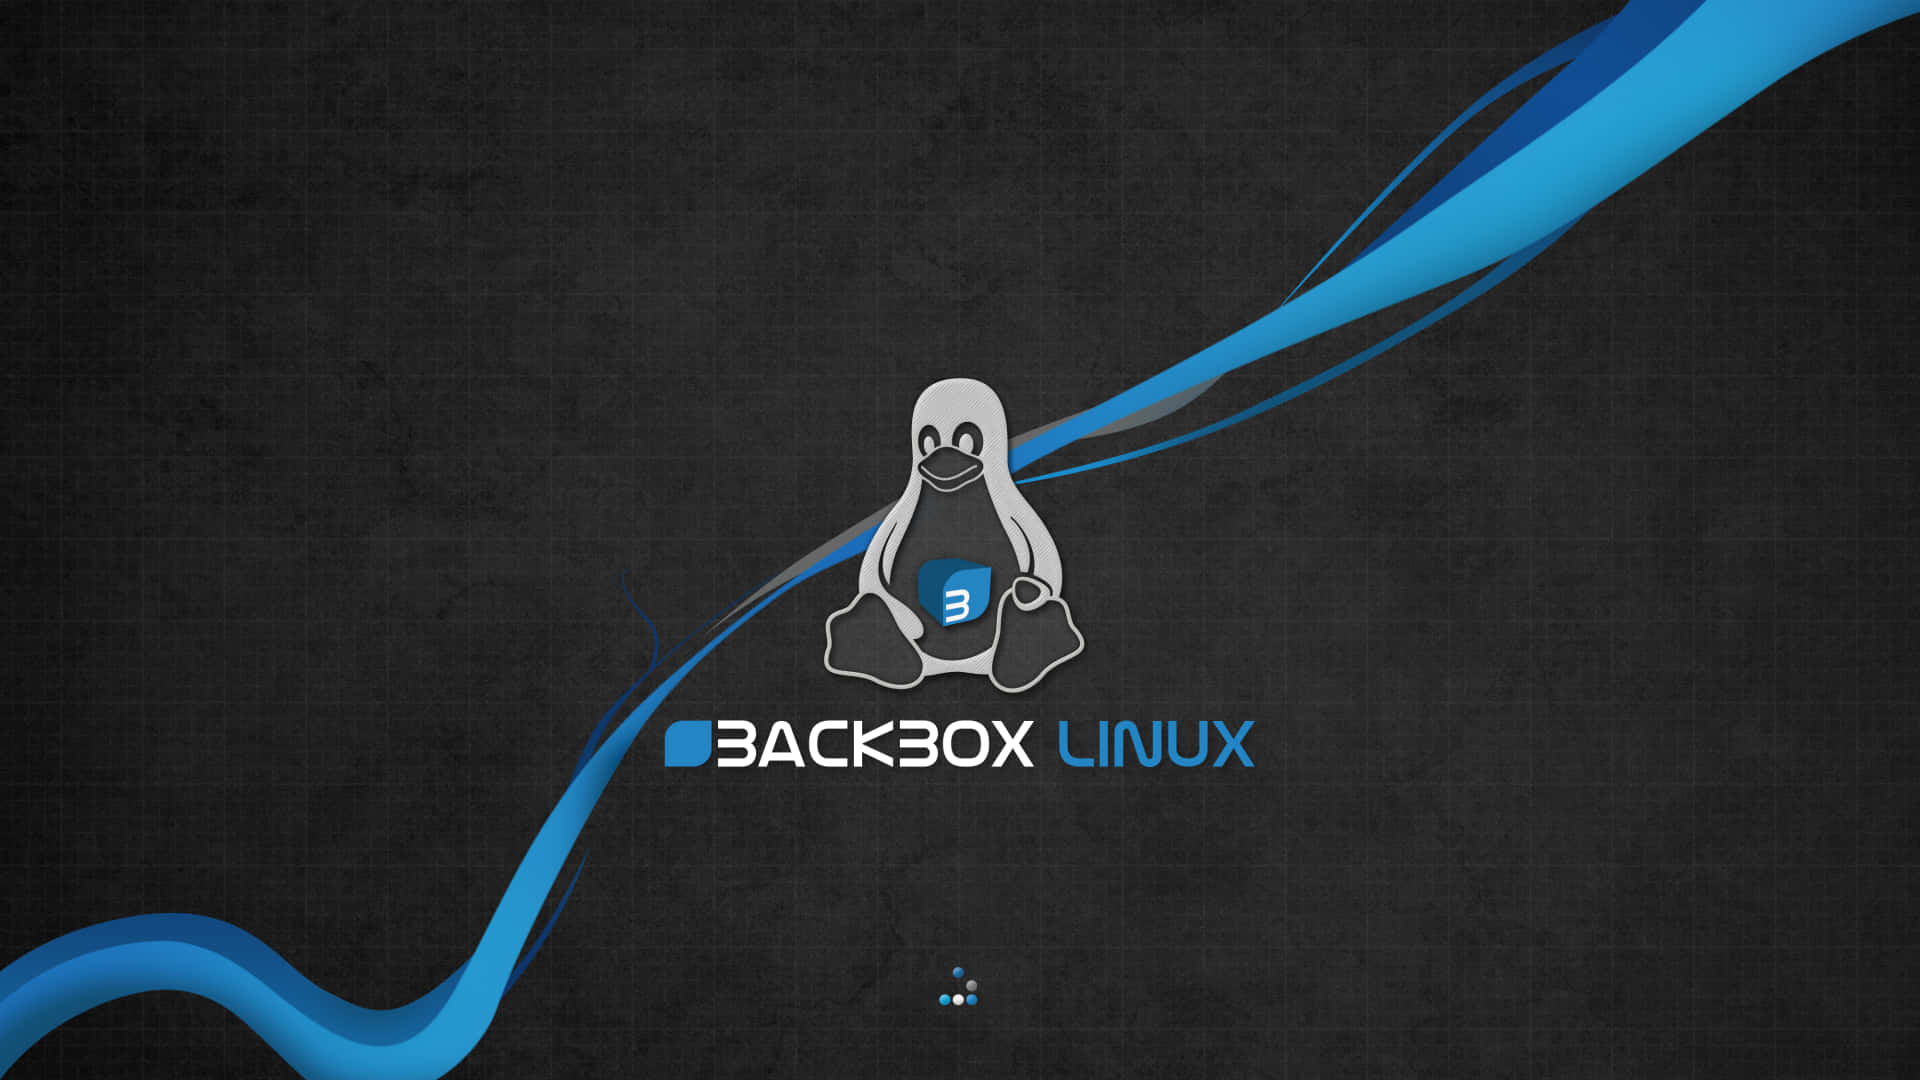 Beautiful Image of a Linux-Based Desktop Wallpaper